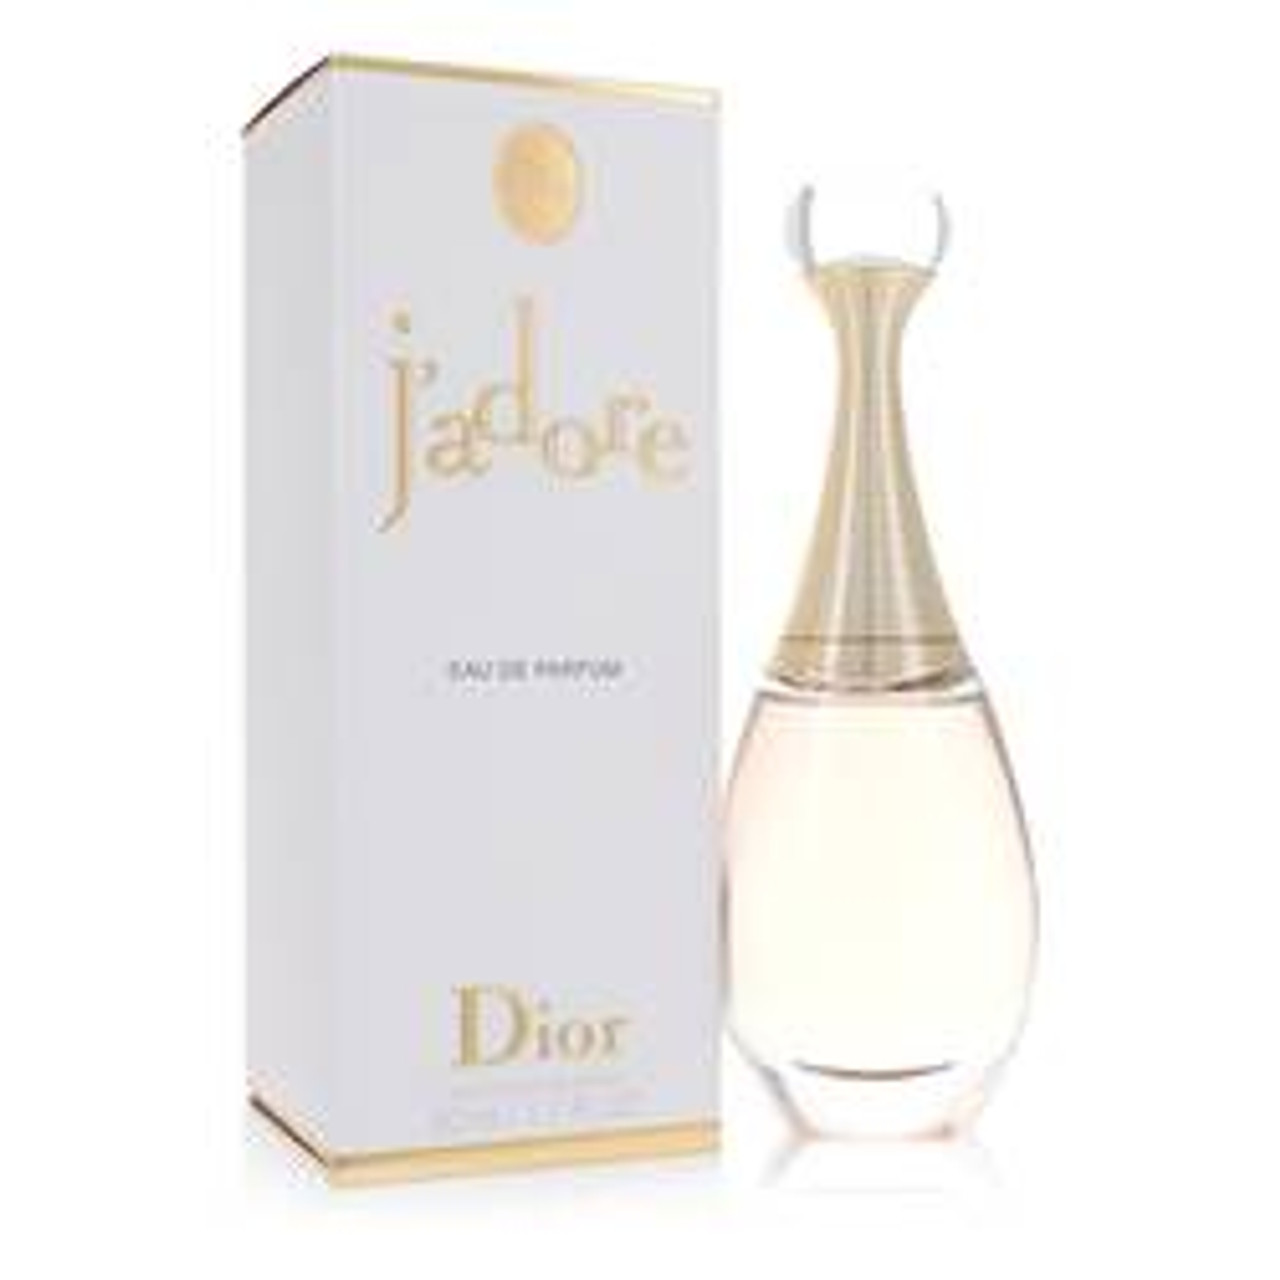 Jadore Perfume By Christian Dior Eau De Parfum Spray 1.7 oz for Women - *Pre-Order